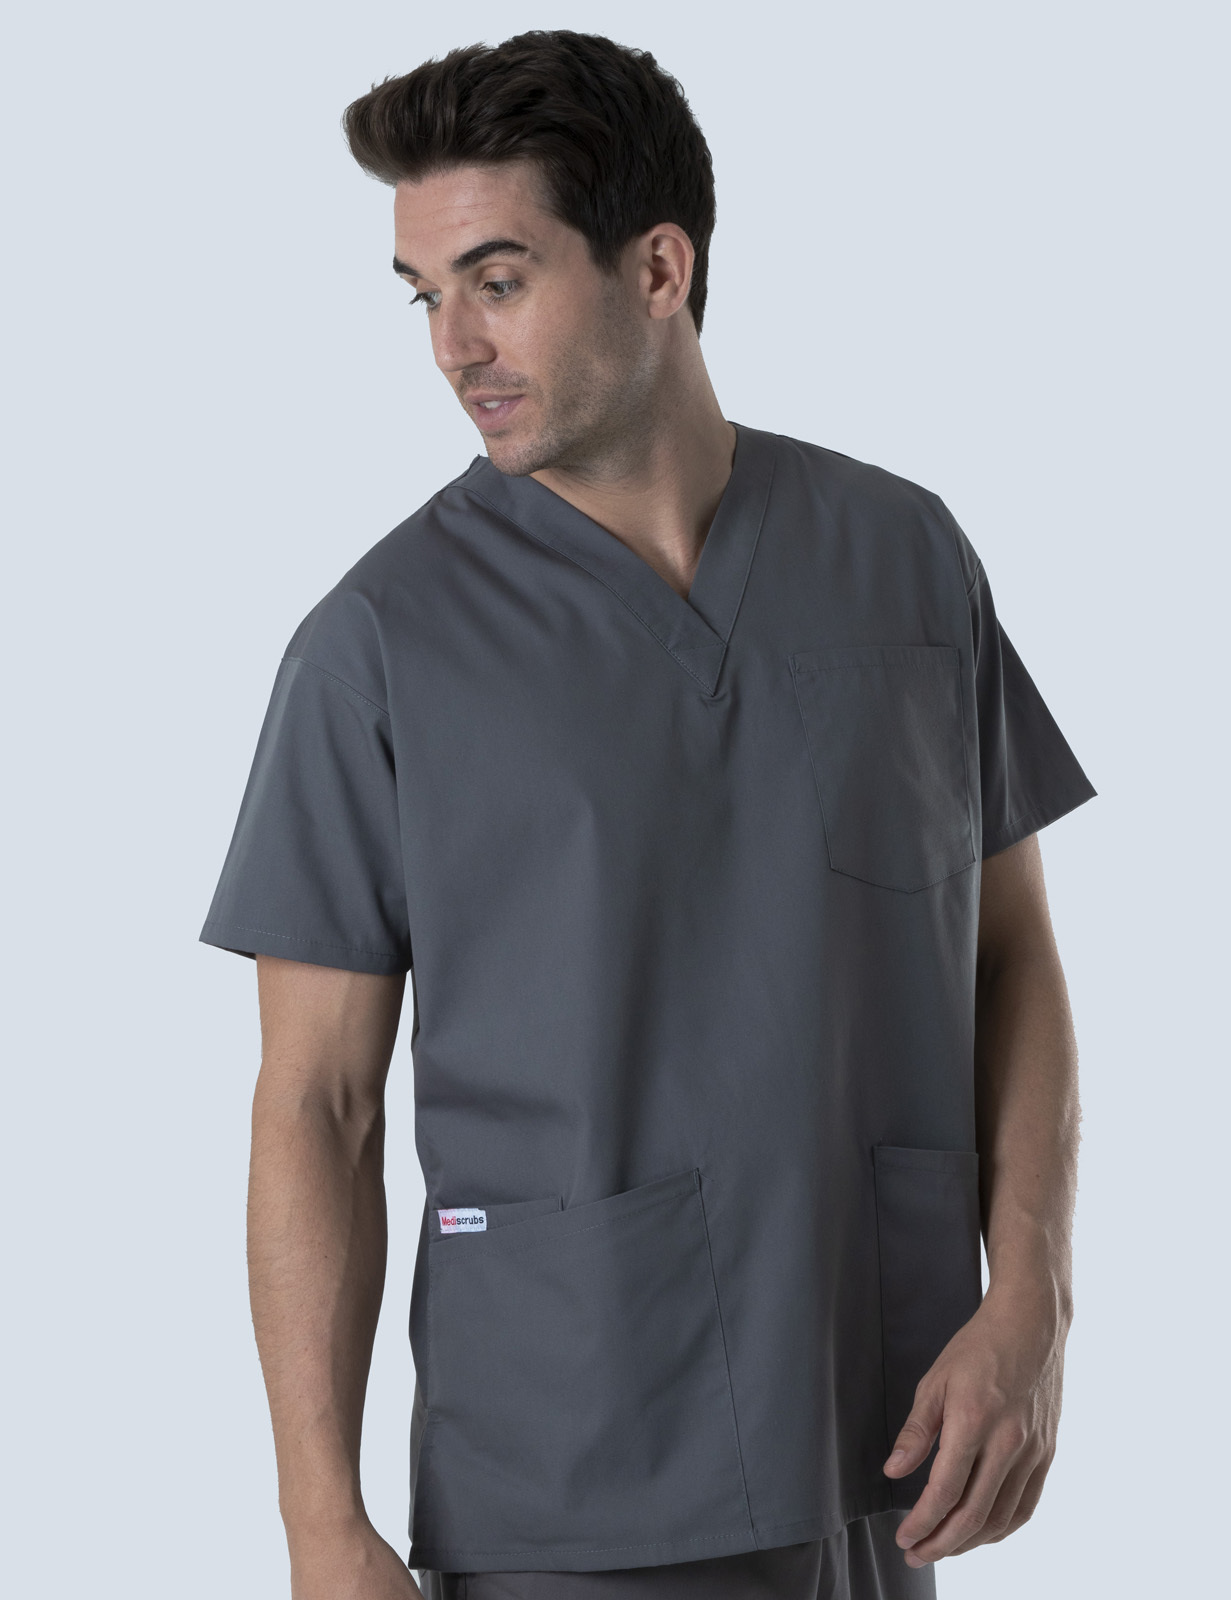 Ipswich Hospital Pharmacy Uniform Top Only Bundle (4 Pocket Top in Steel Grey + 3 Logos)